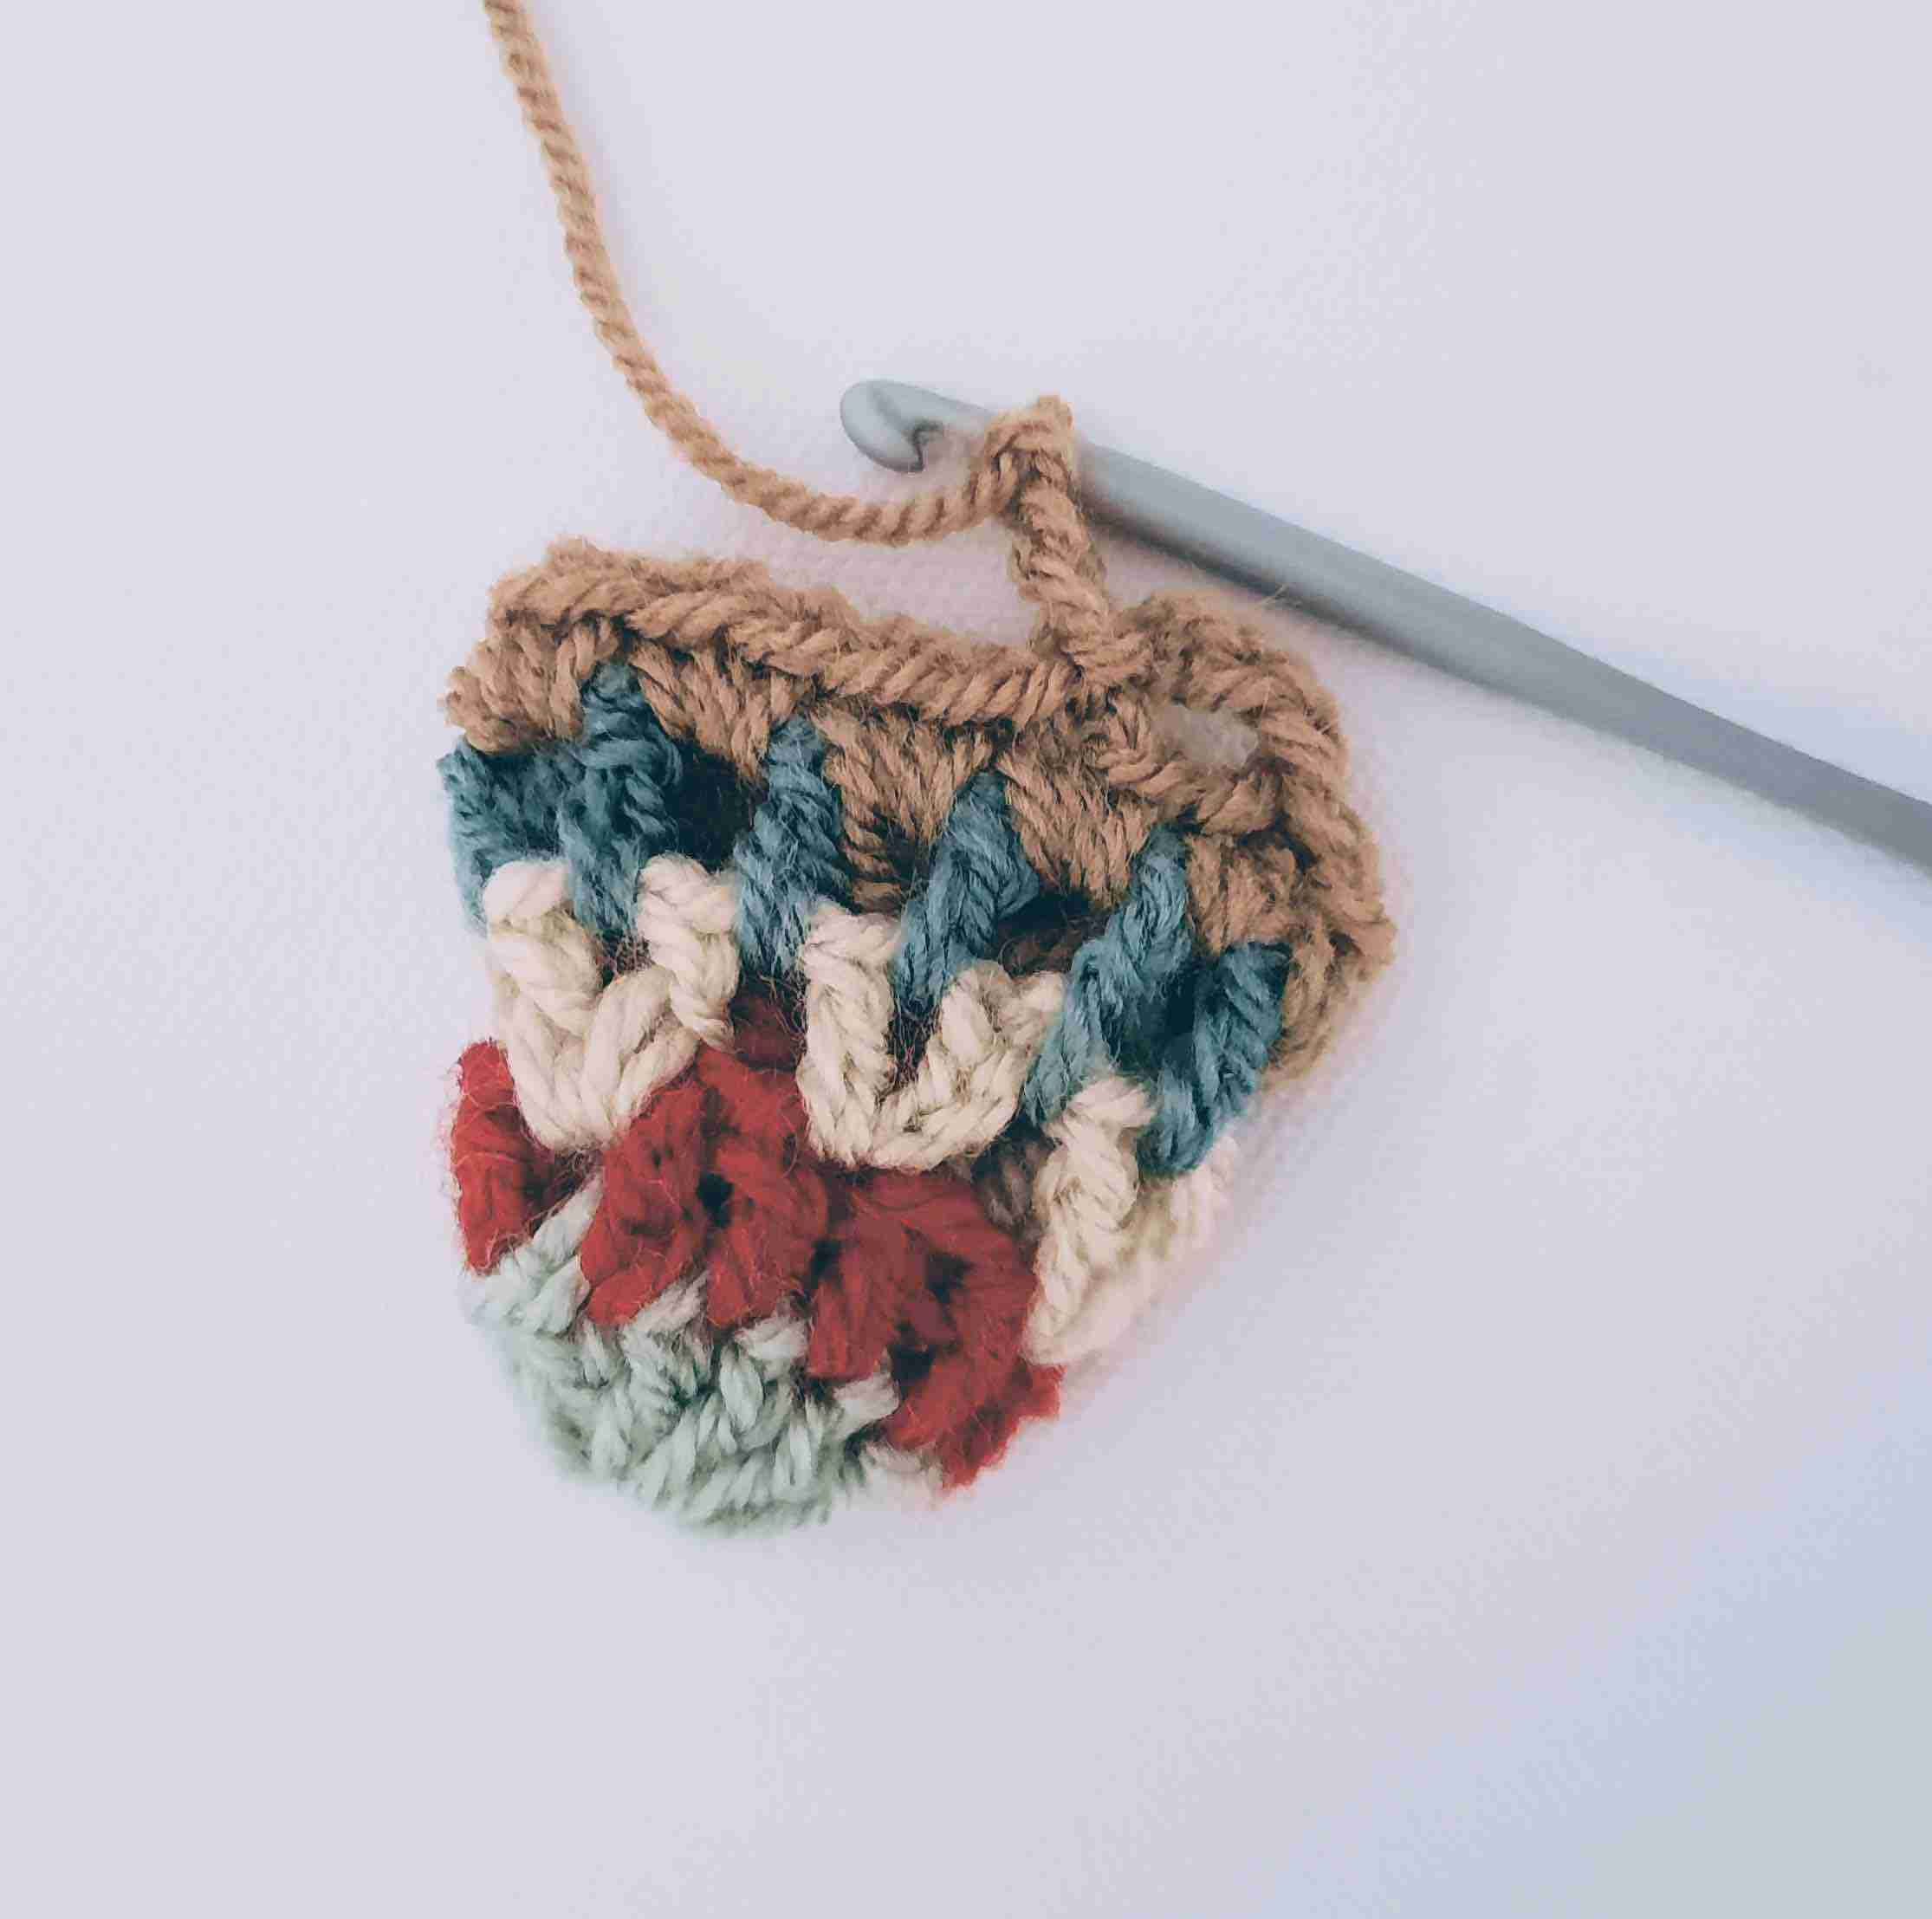 Small crochet bell pattern